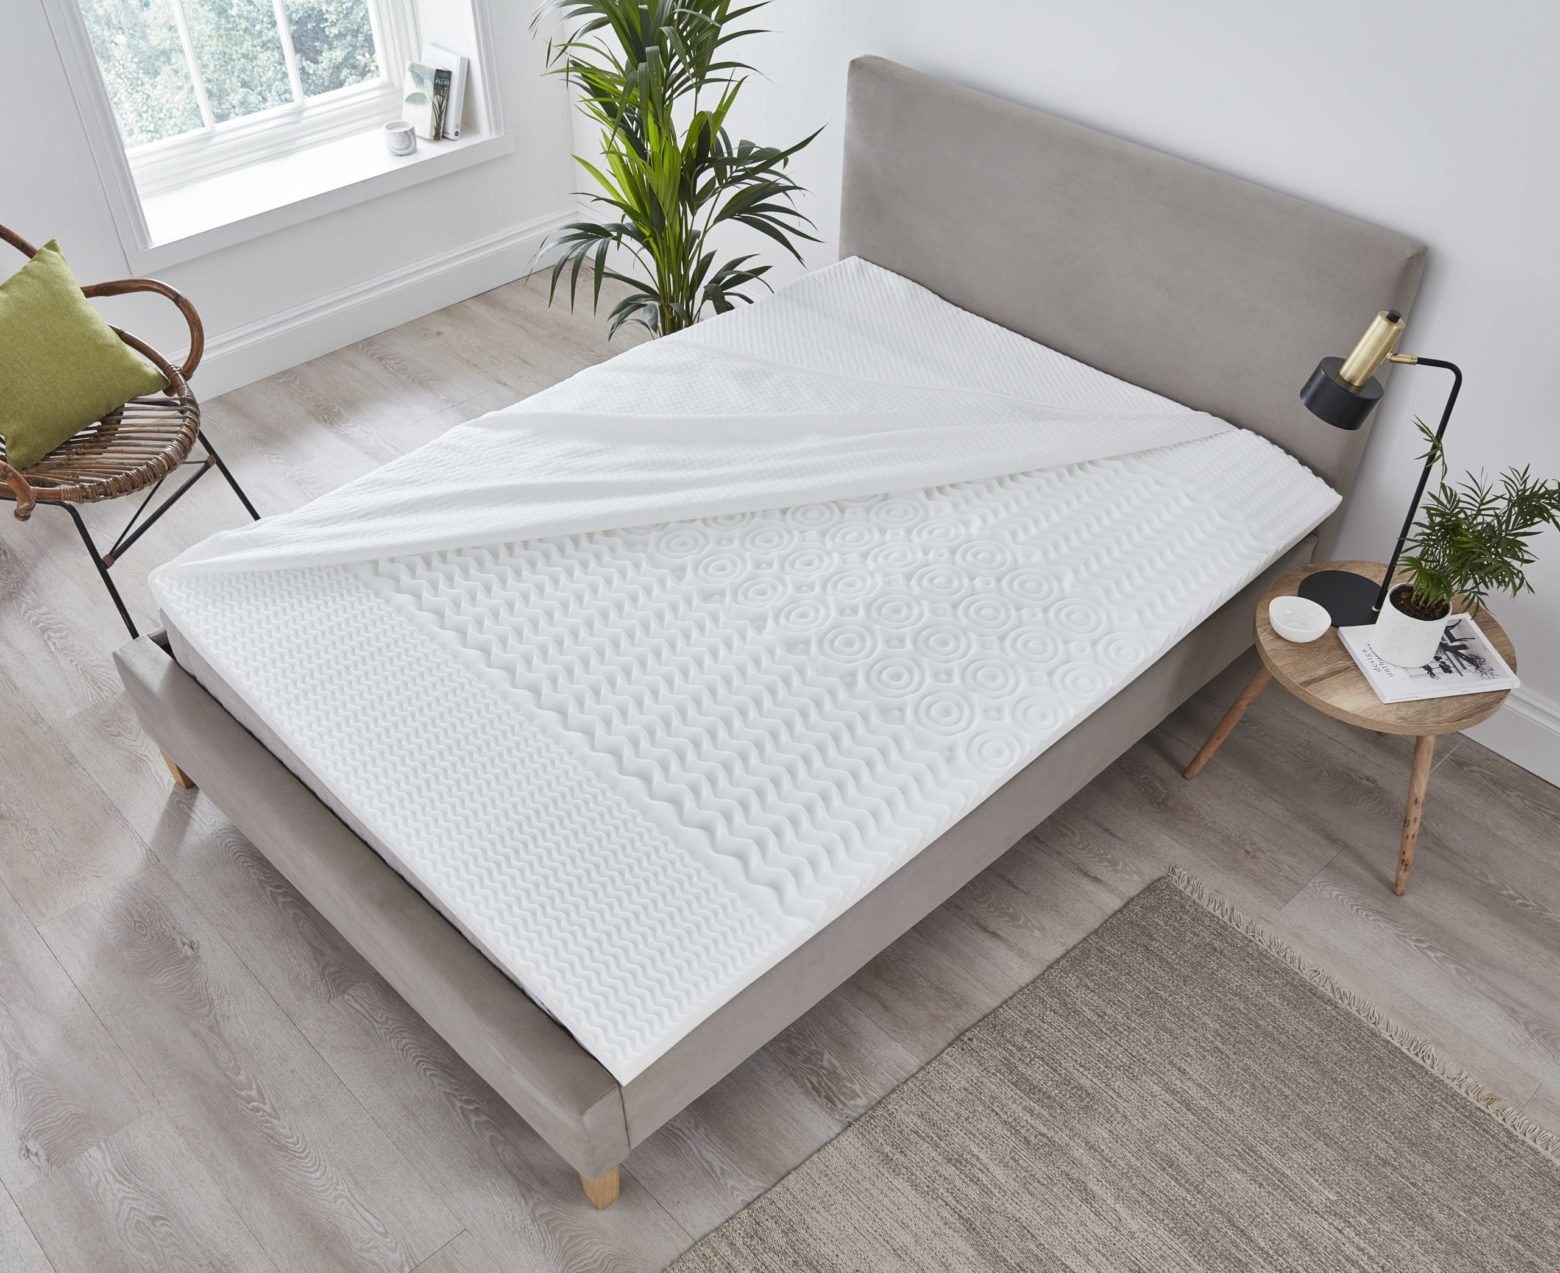 home design 5 zone memory foam mattress toppers